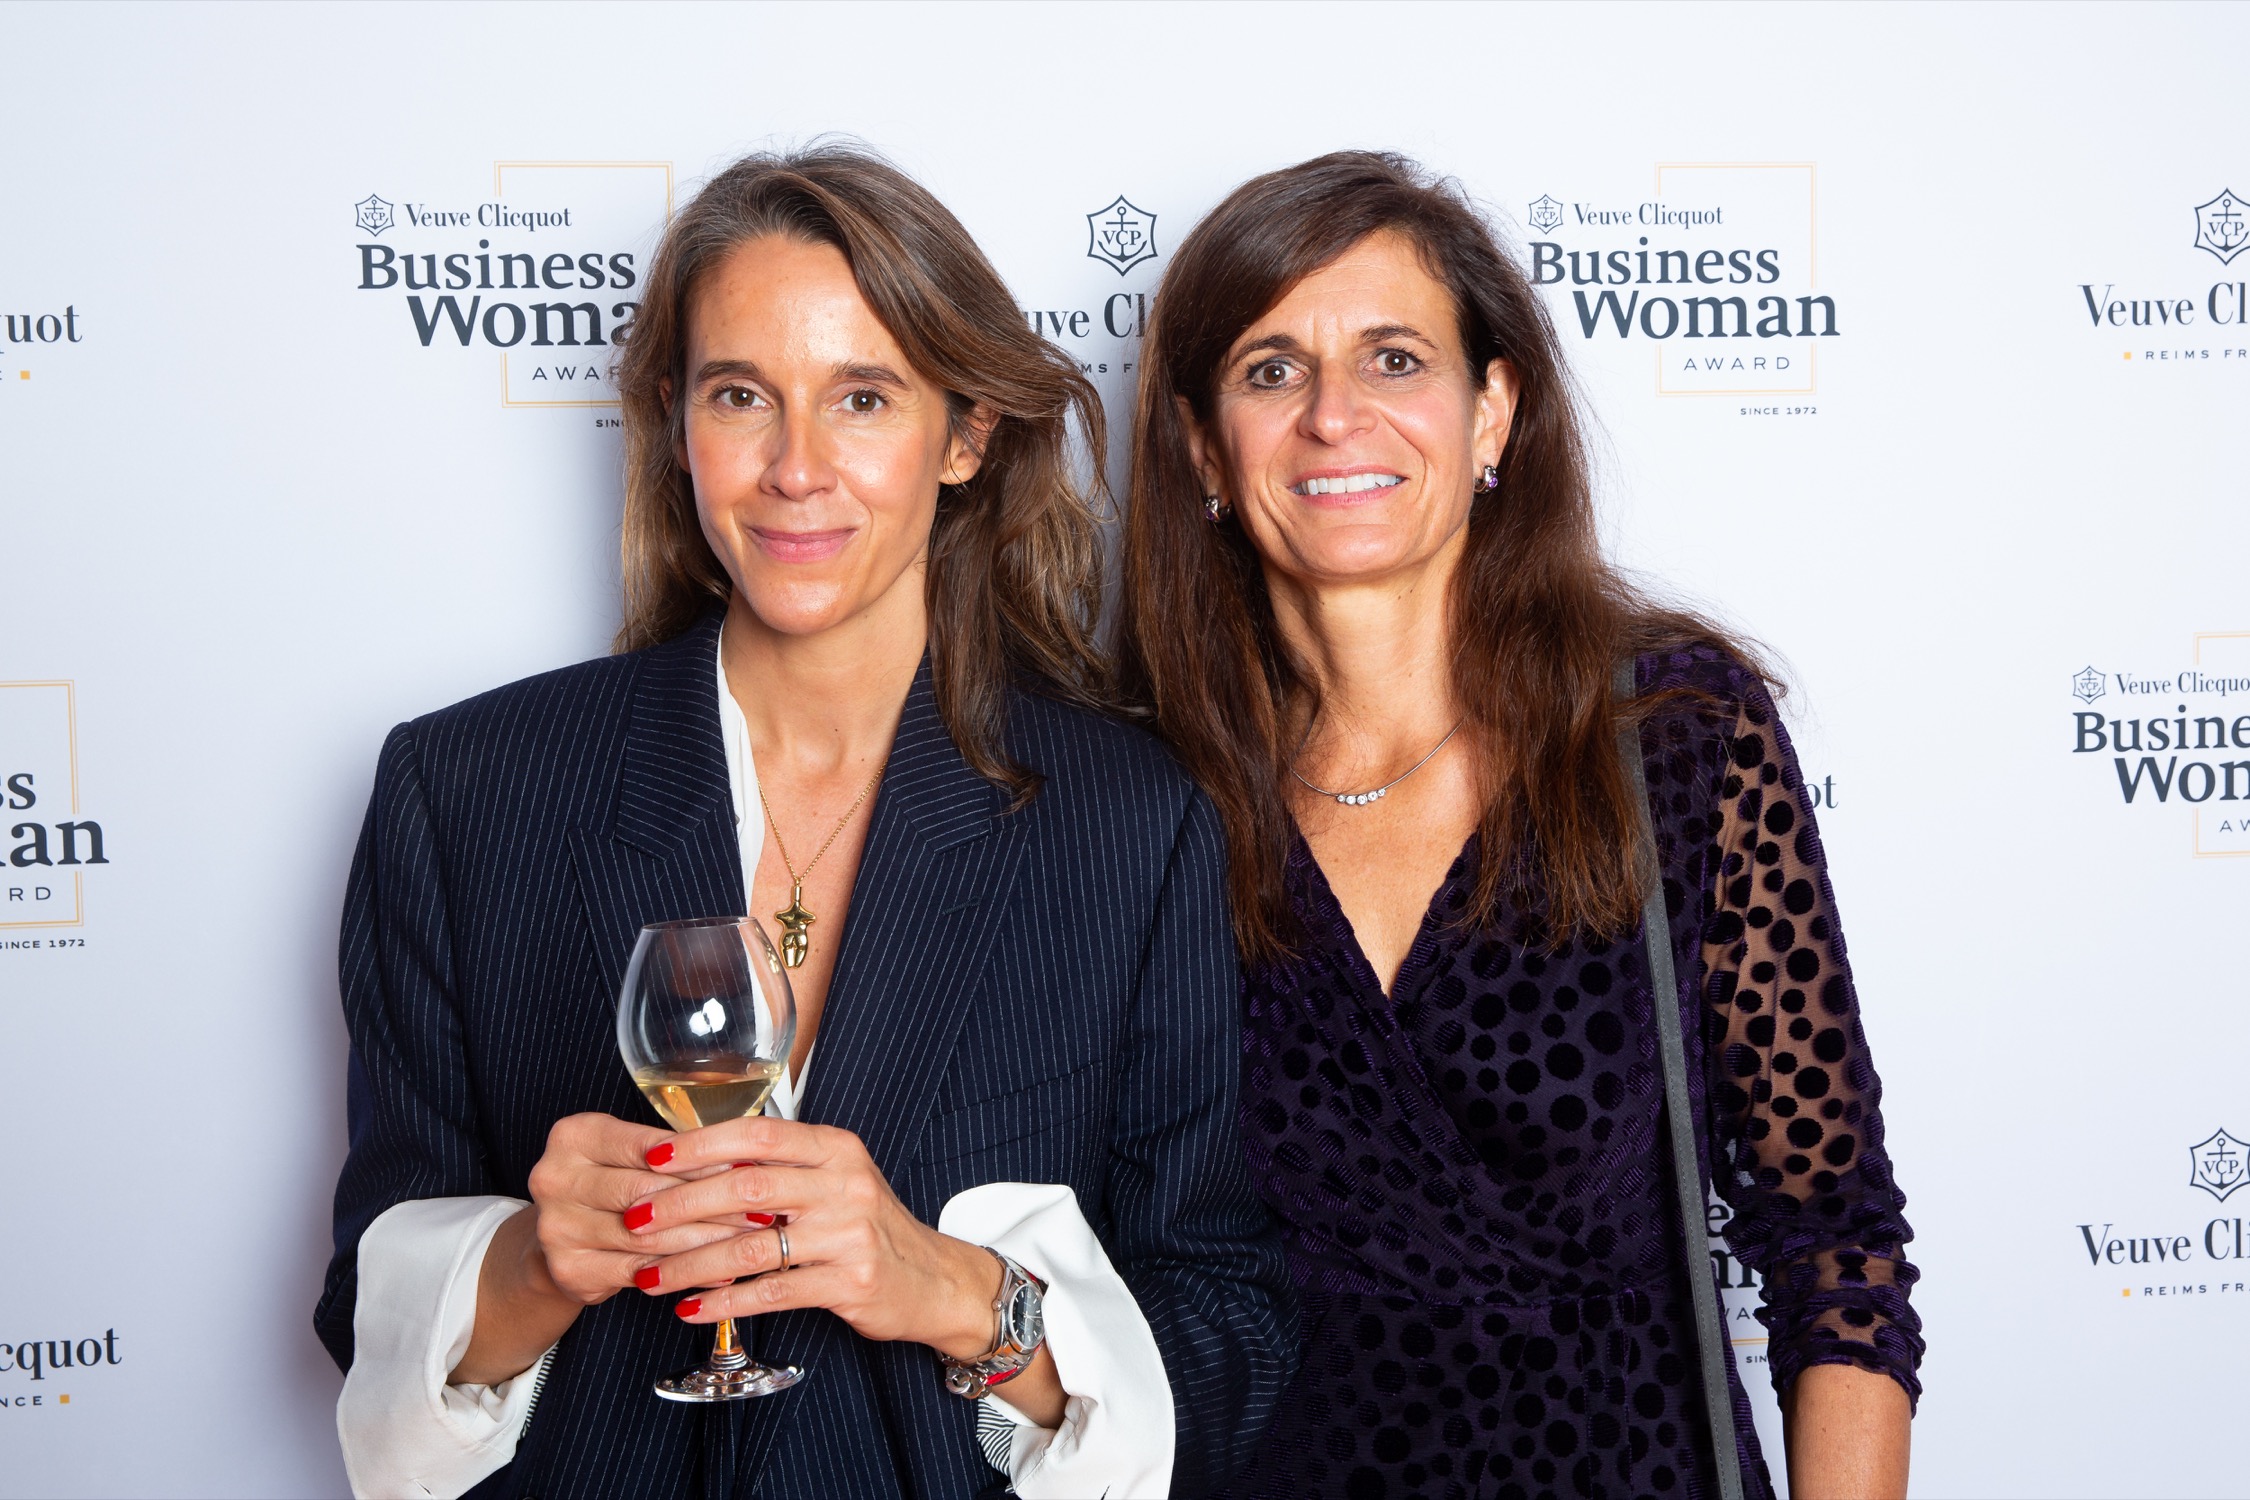 Carole Bildé and the winner of Veuve Clicquot Business Woman Award 2019 Monika Walser